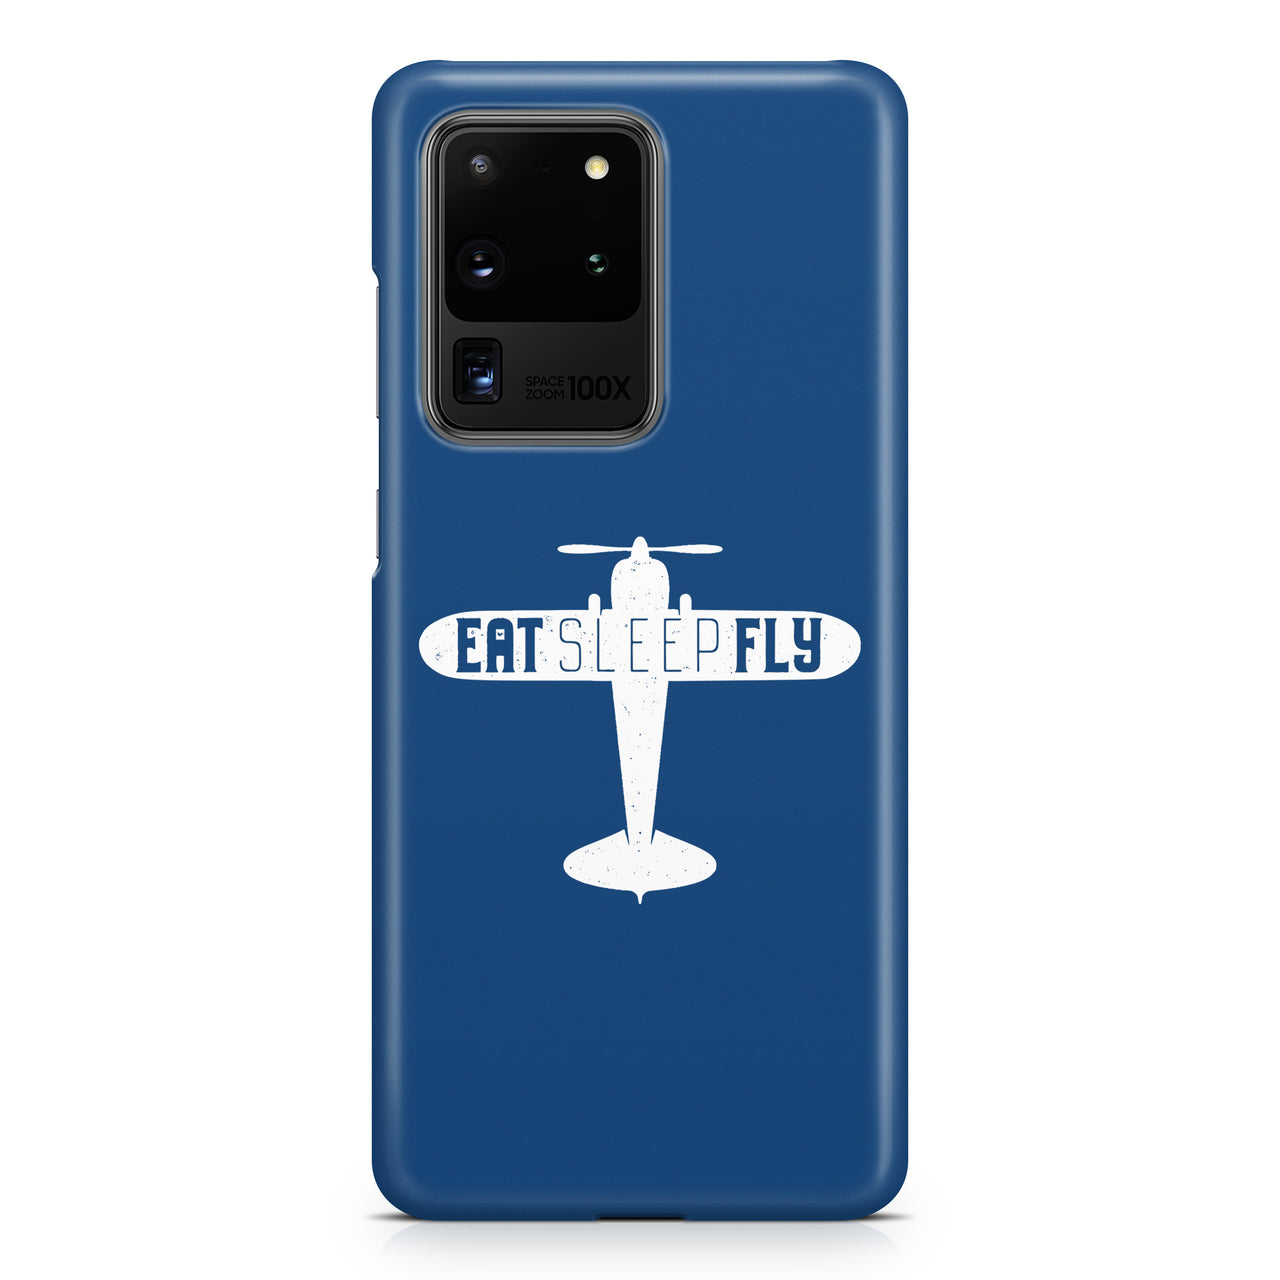 Eat Sleep Fly & Propeller Samsung S & Note Cases